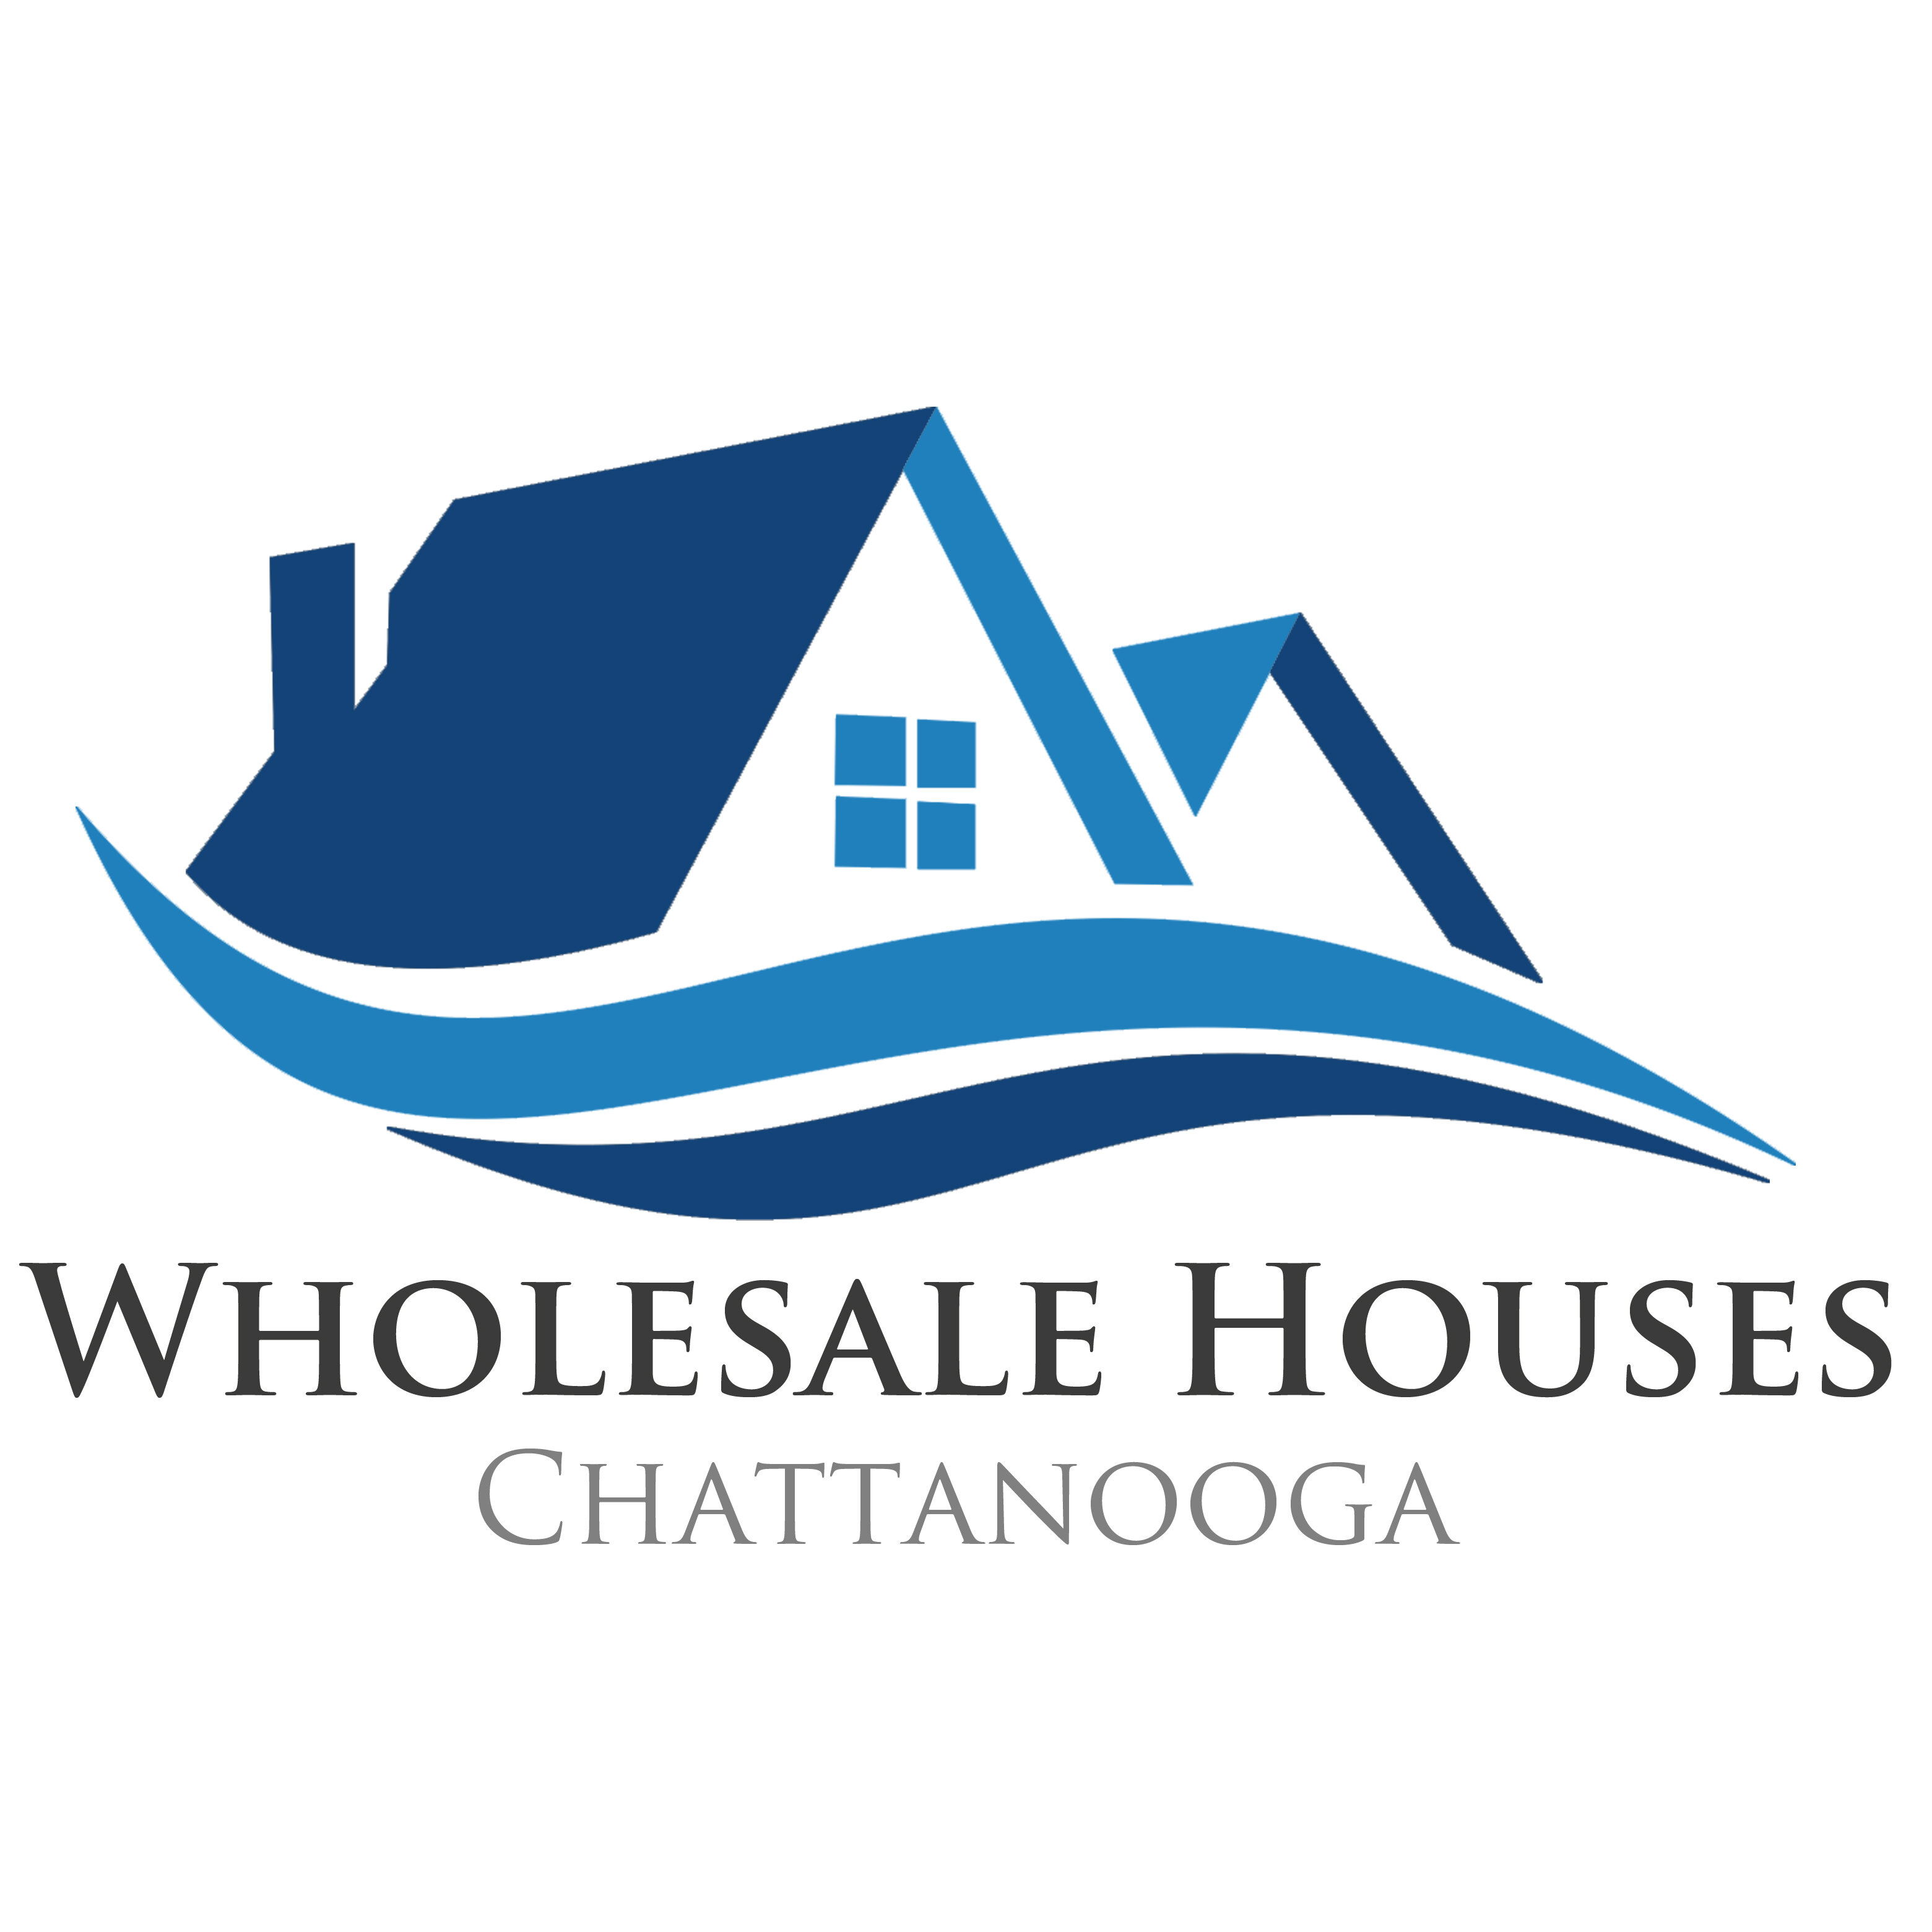 Wholesale Houses Chattanooga logo